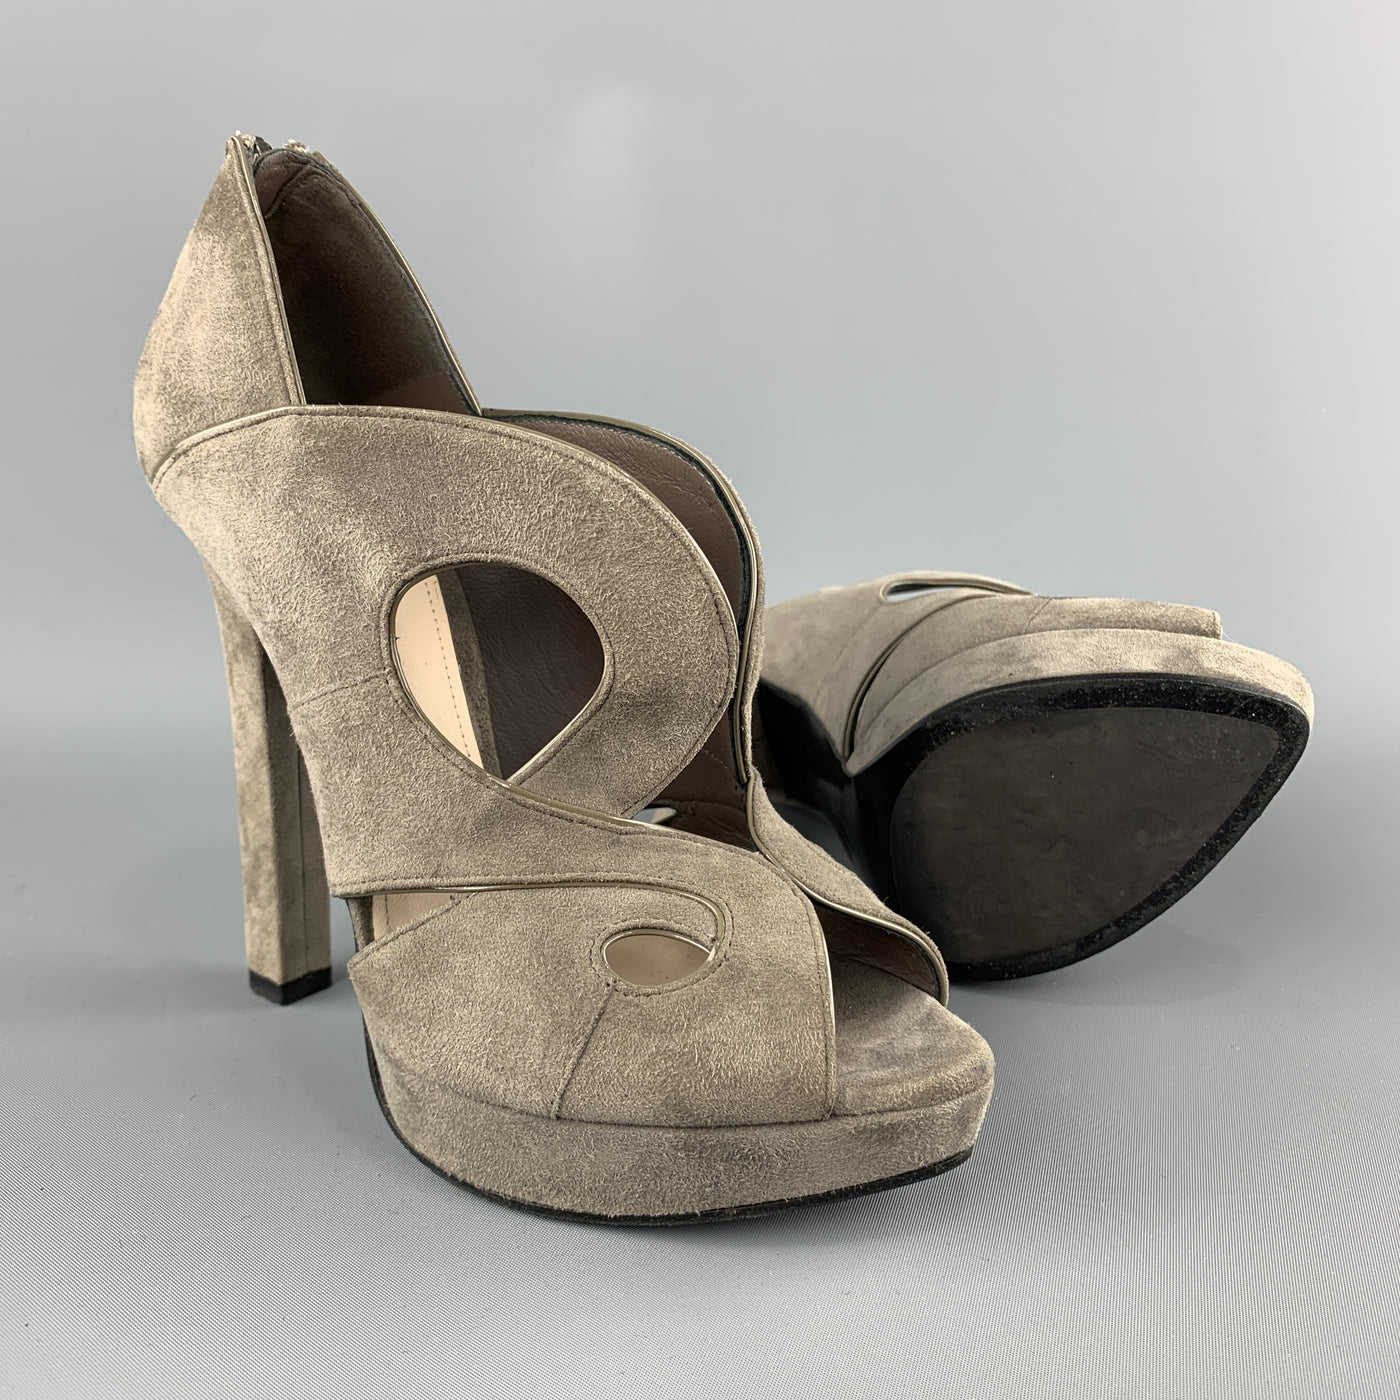 BOTTEGA VENETA Size 7 Grey Suede Patent Leather Piping Peep Toe Sandals